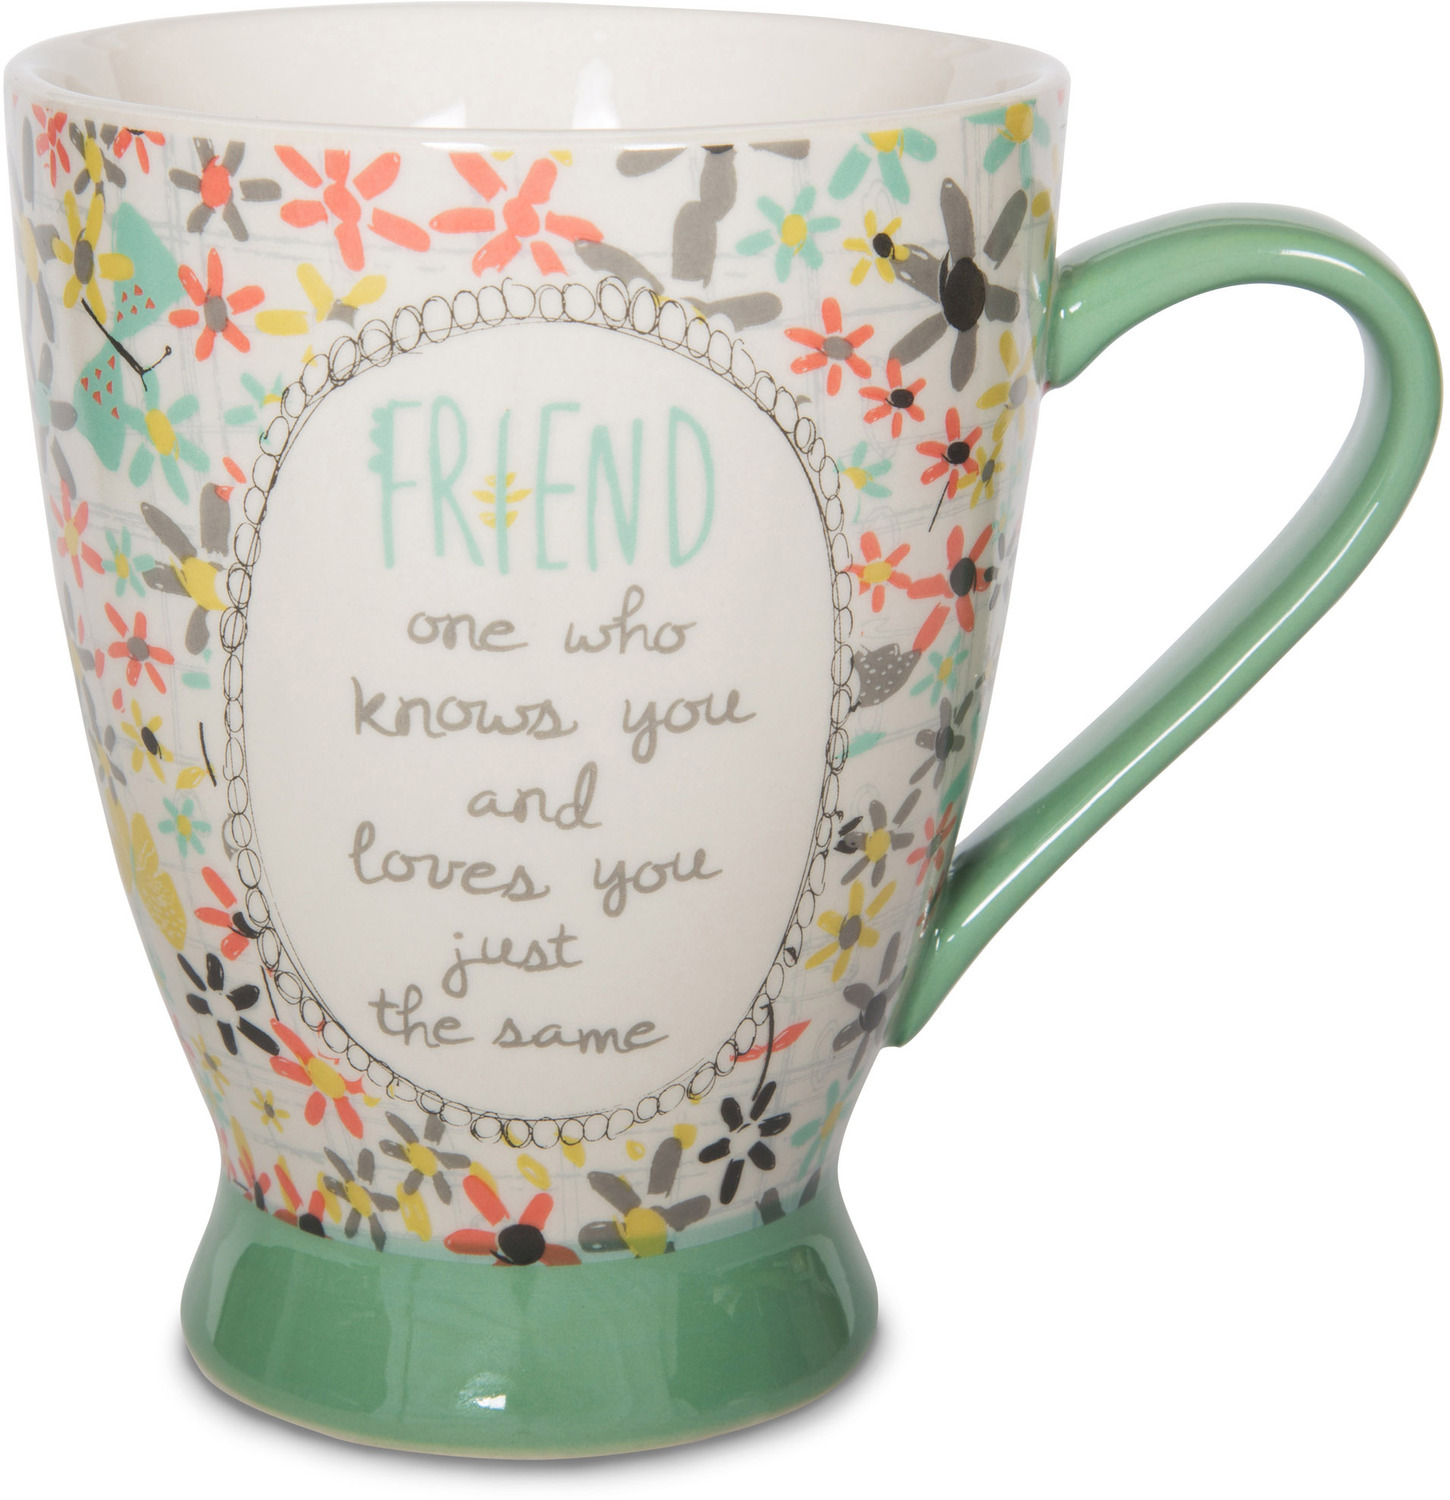 Friend by Bloom by Amylee Weeks - Friend - 18 oz Flowers Mug